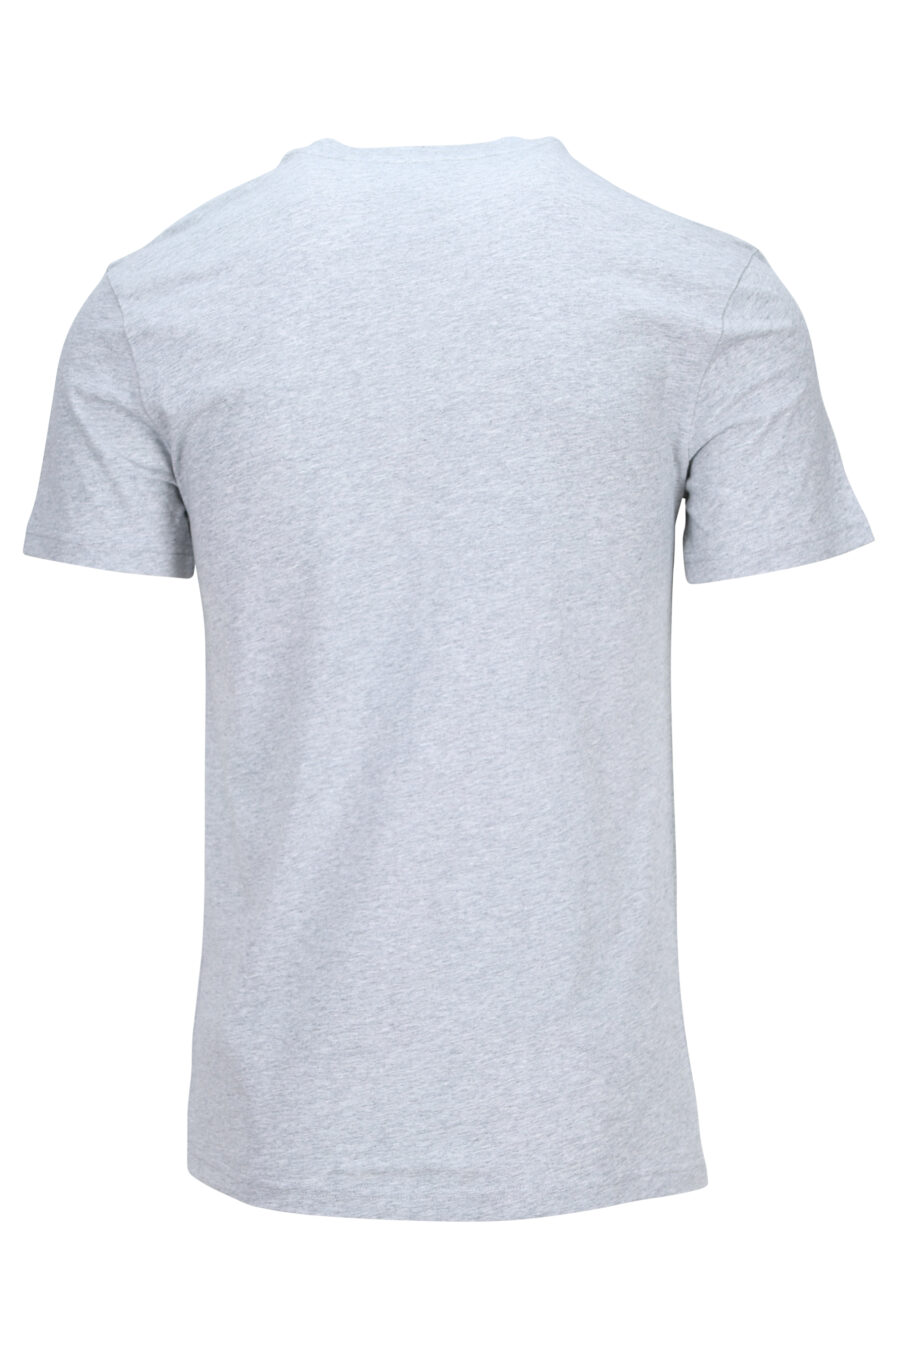 Grey T-shirt with maxilogue "couture milano" - 889316936414 1